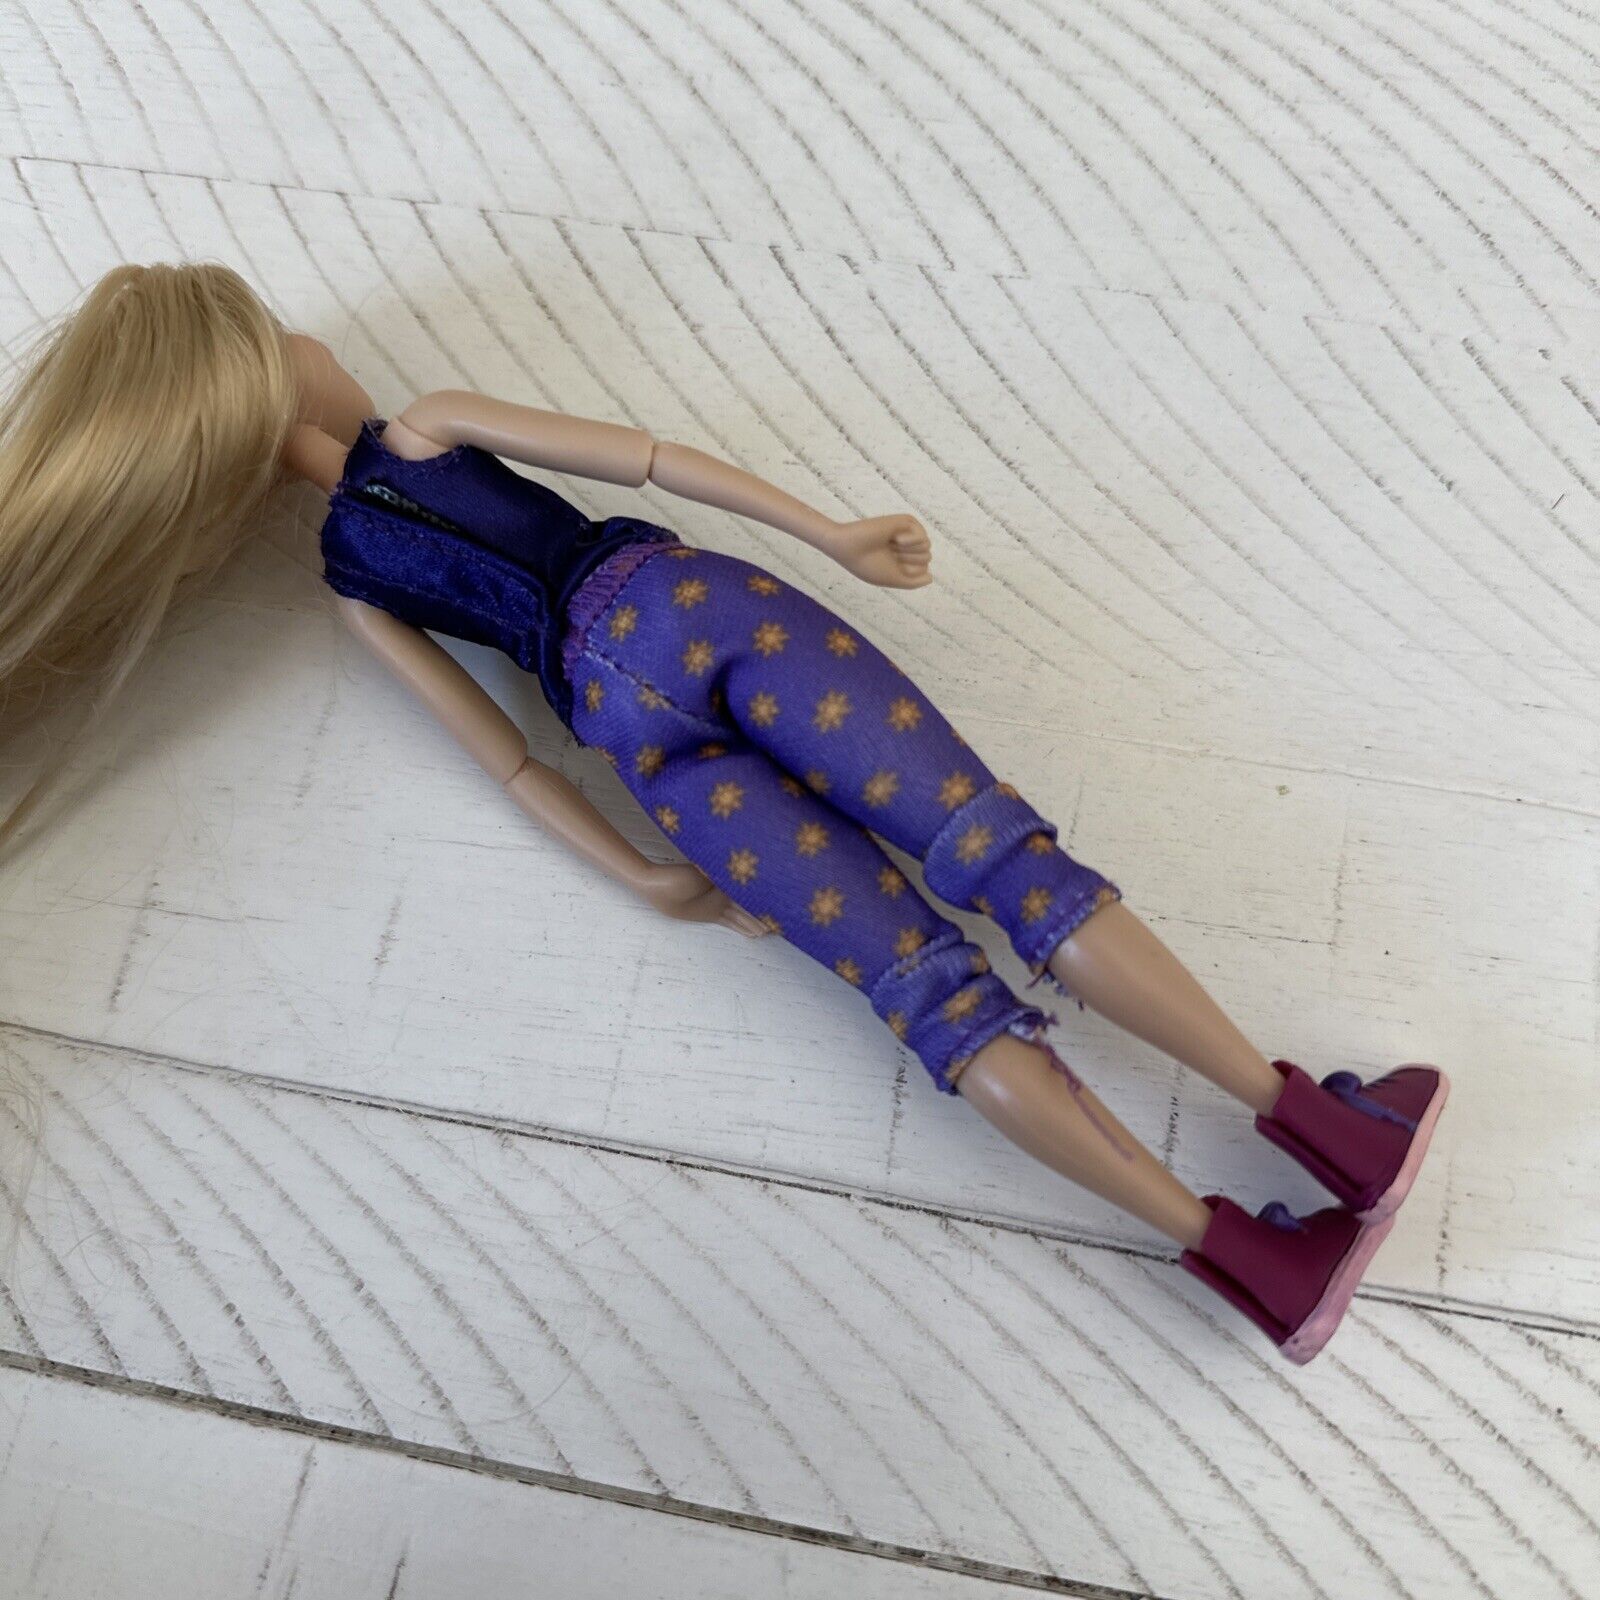 Rapunzel Princesses 6" Doll Ralph Breaks the Internet From Disney Store Set